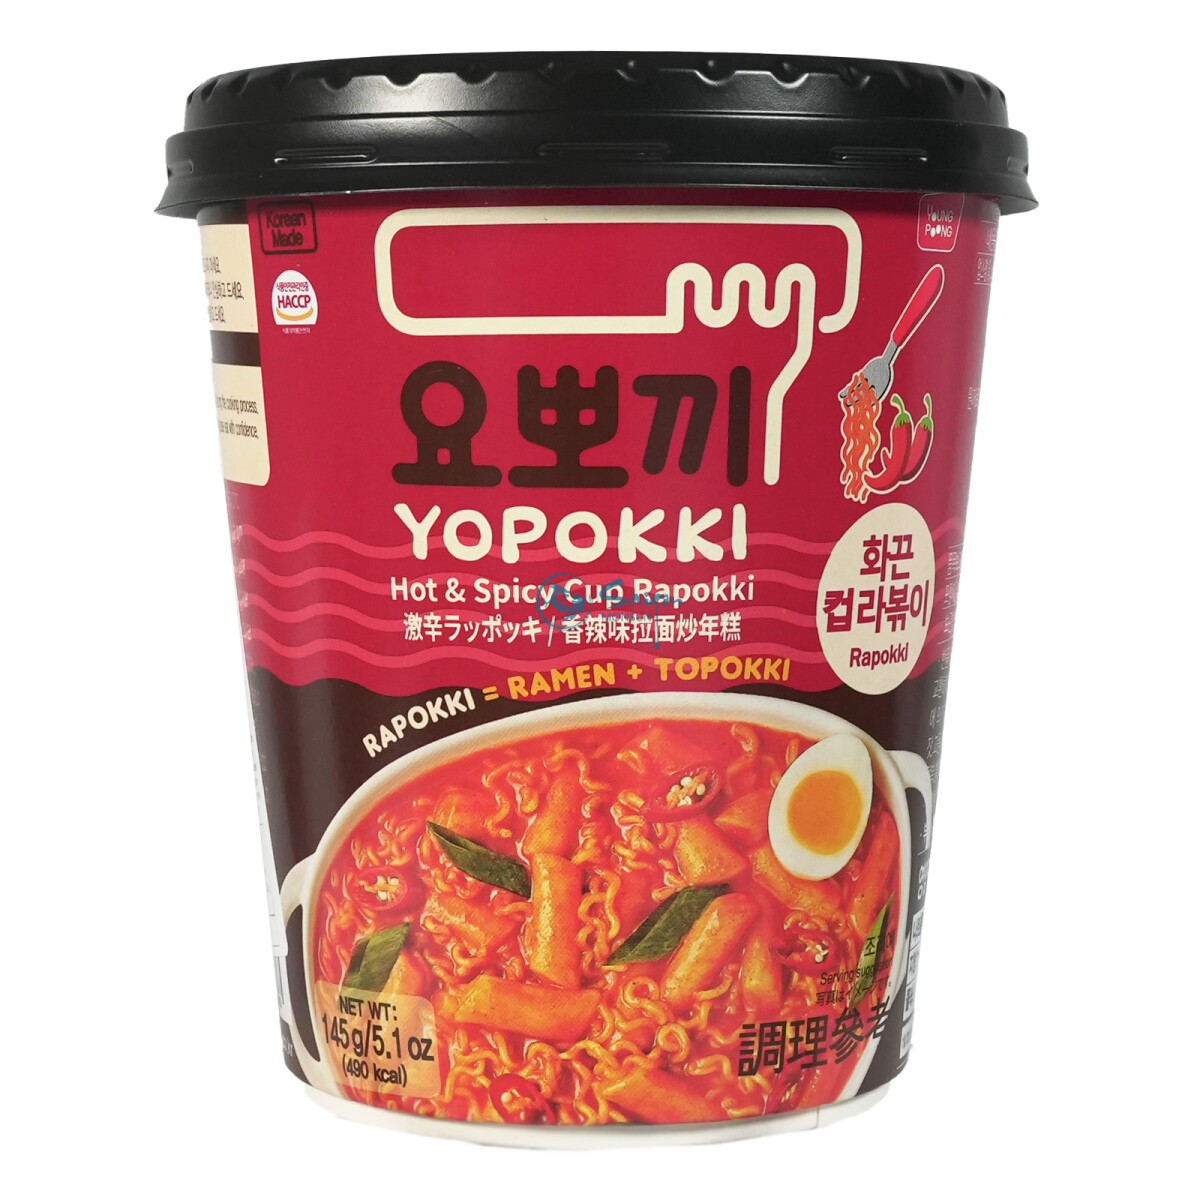 Yopokki Hot & Spicy Cup Rapokki Ramen Topokki 145g